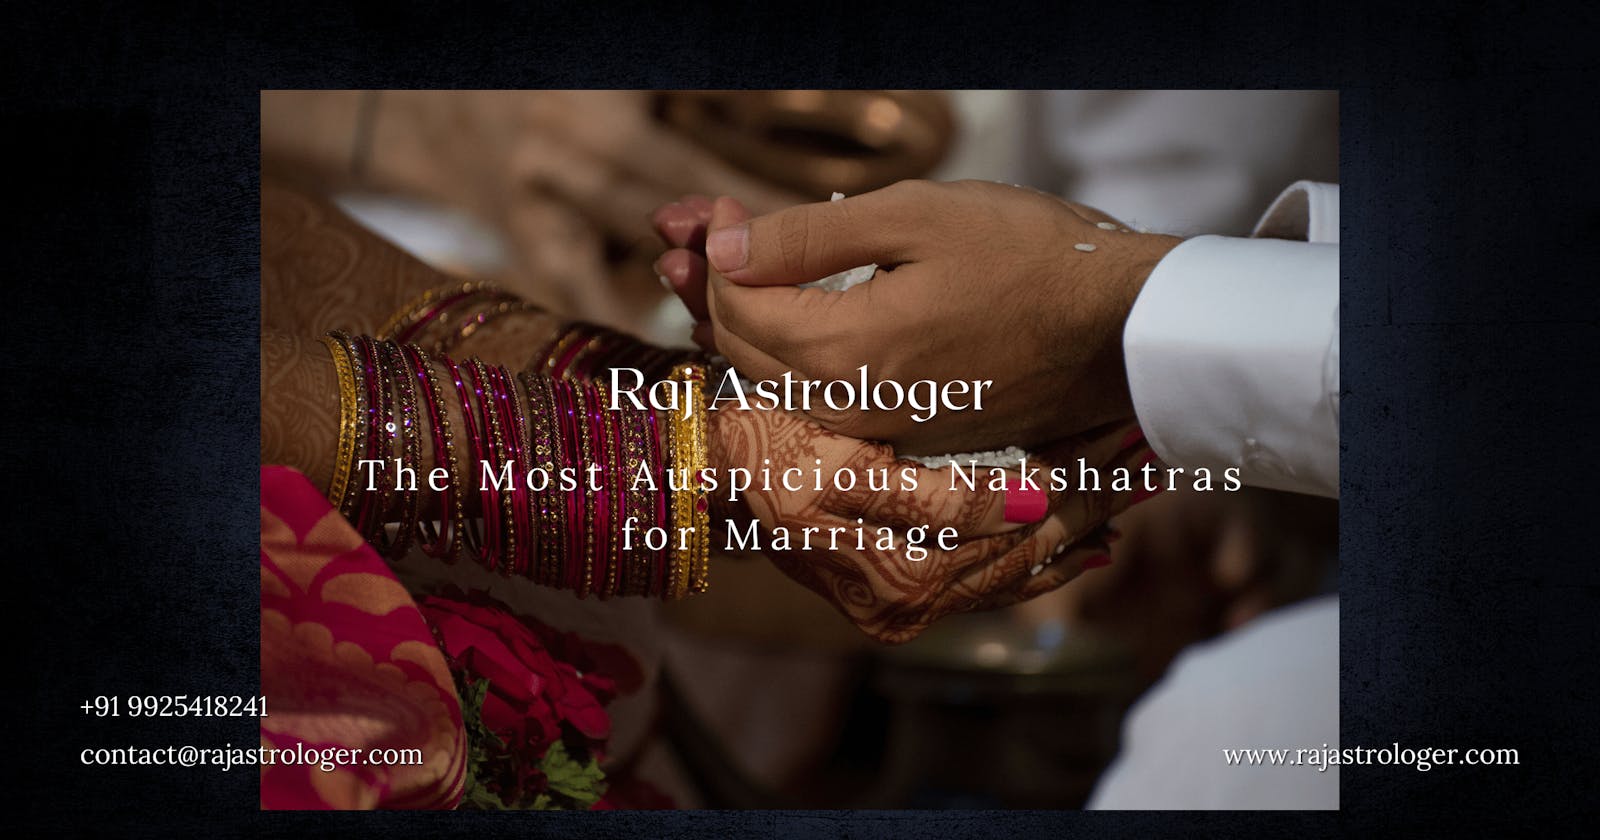 The Most Auspicious Nakshatras for Marriage